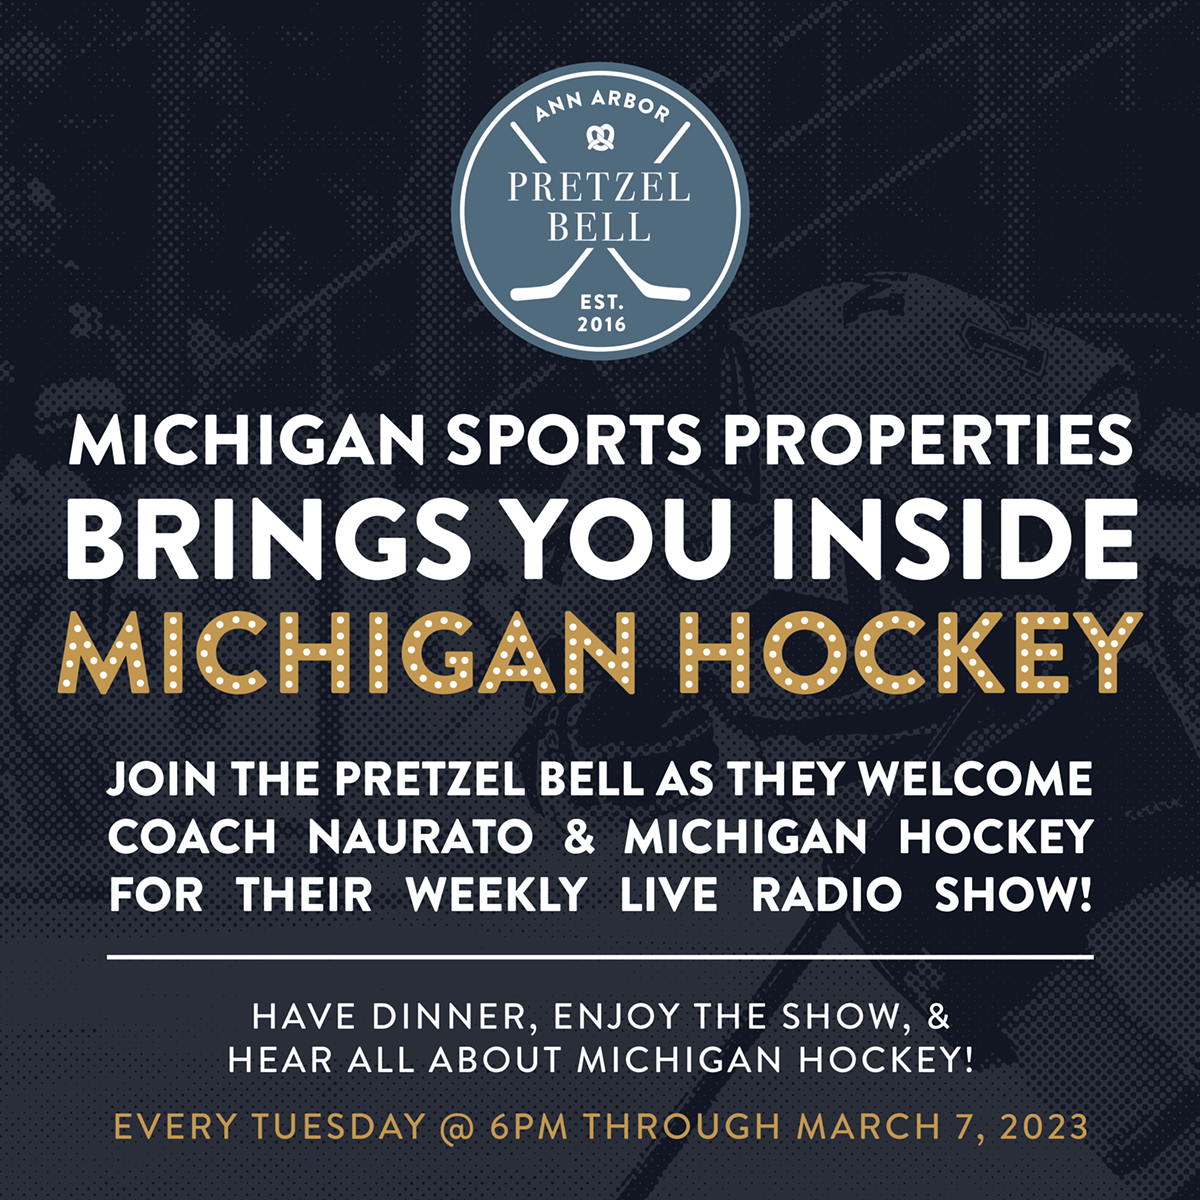 Michigan Hockey @ The Pretzel Bell